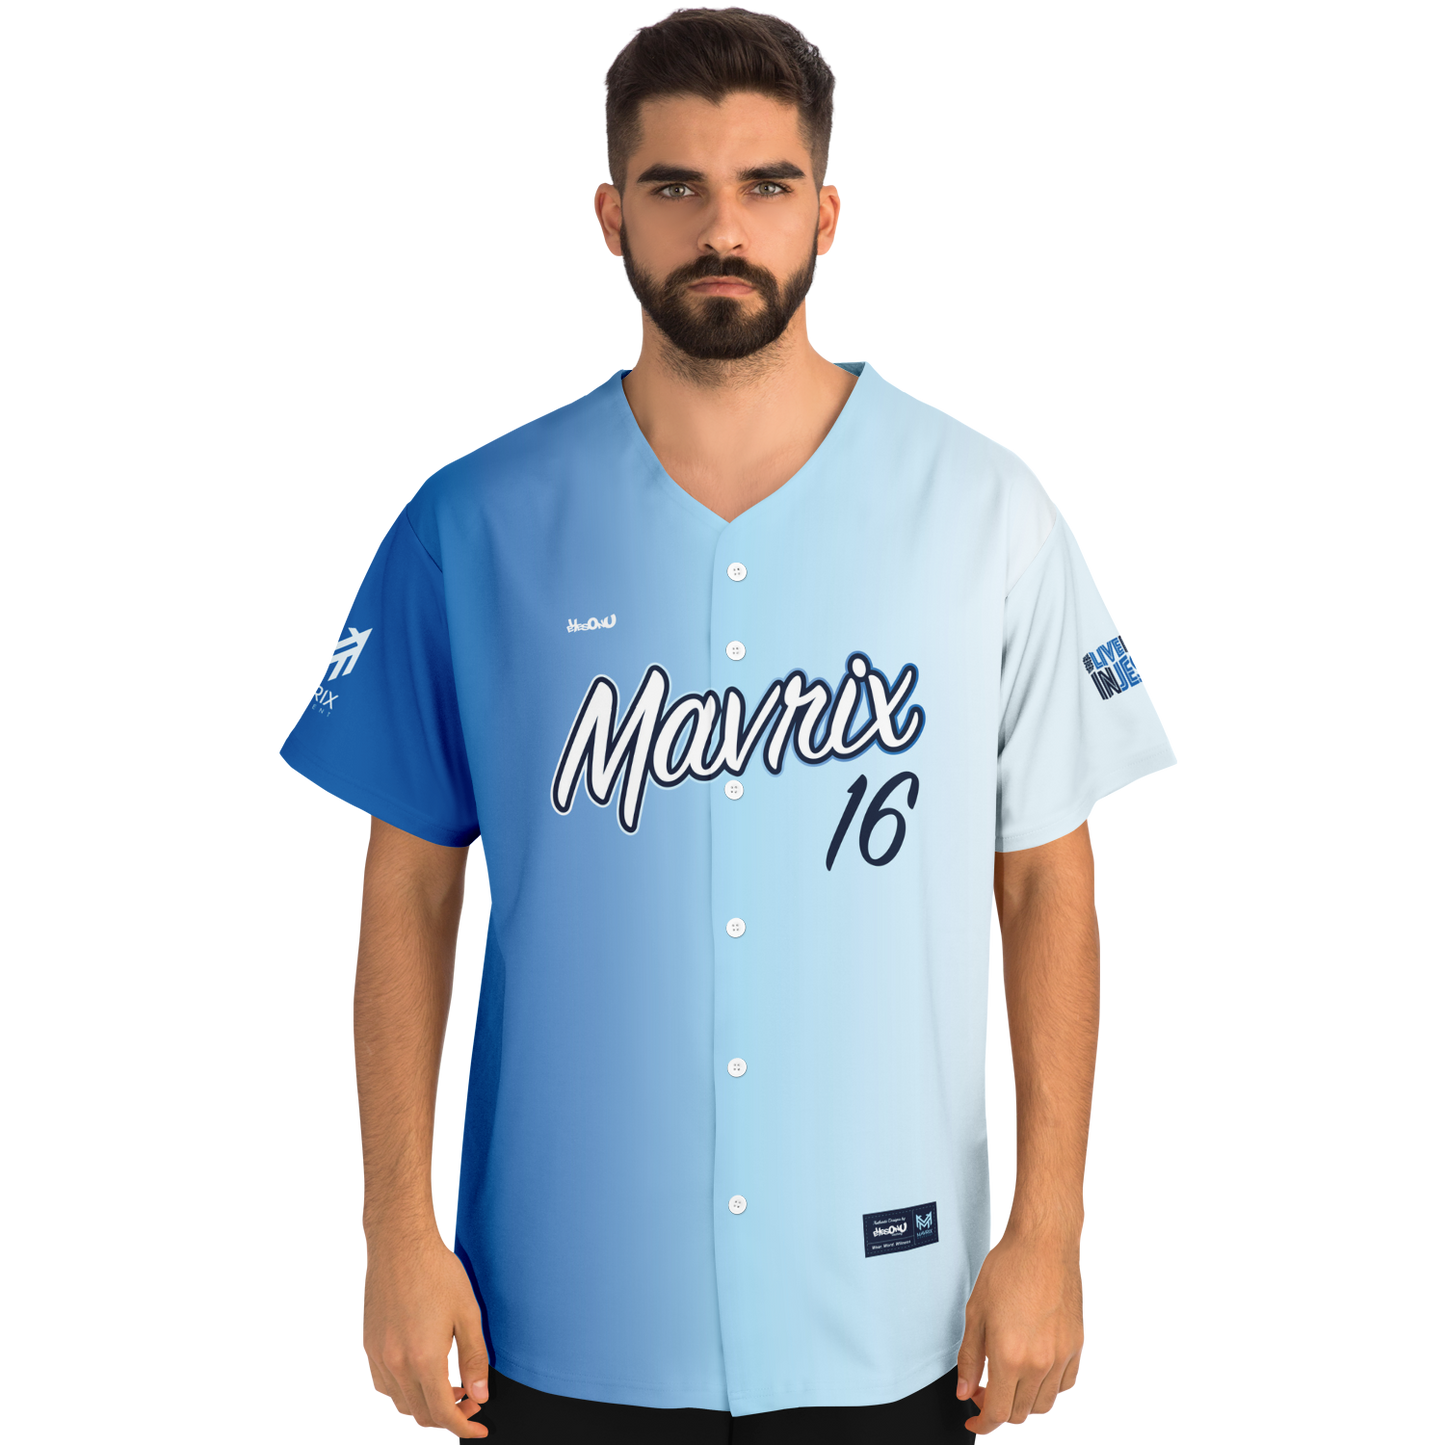 Mavrix Blue Gradient Baseball Jersey